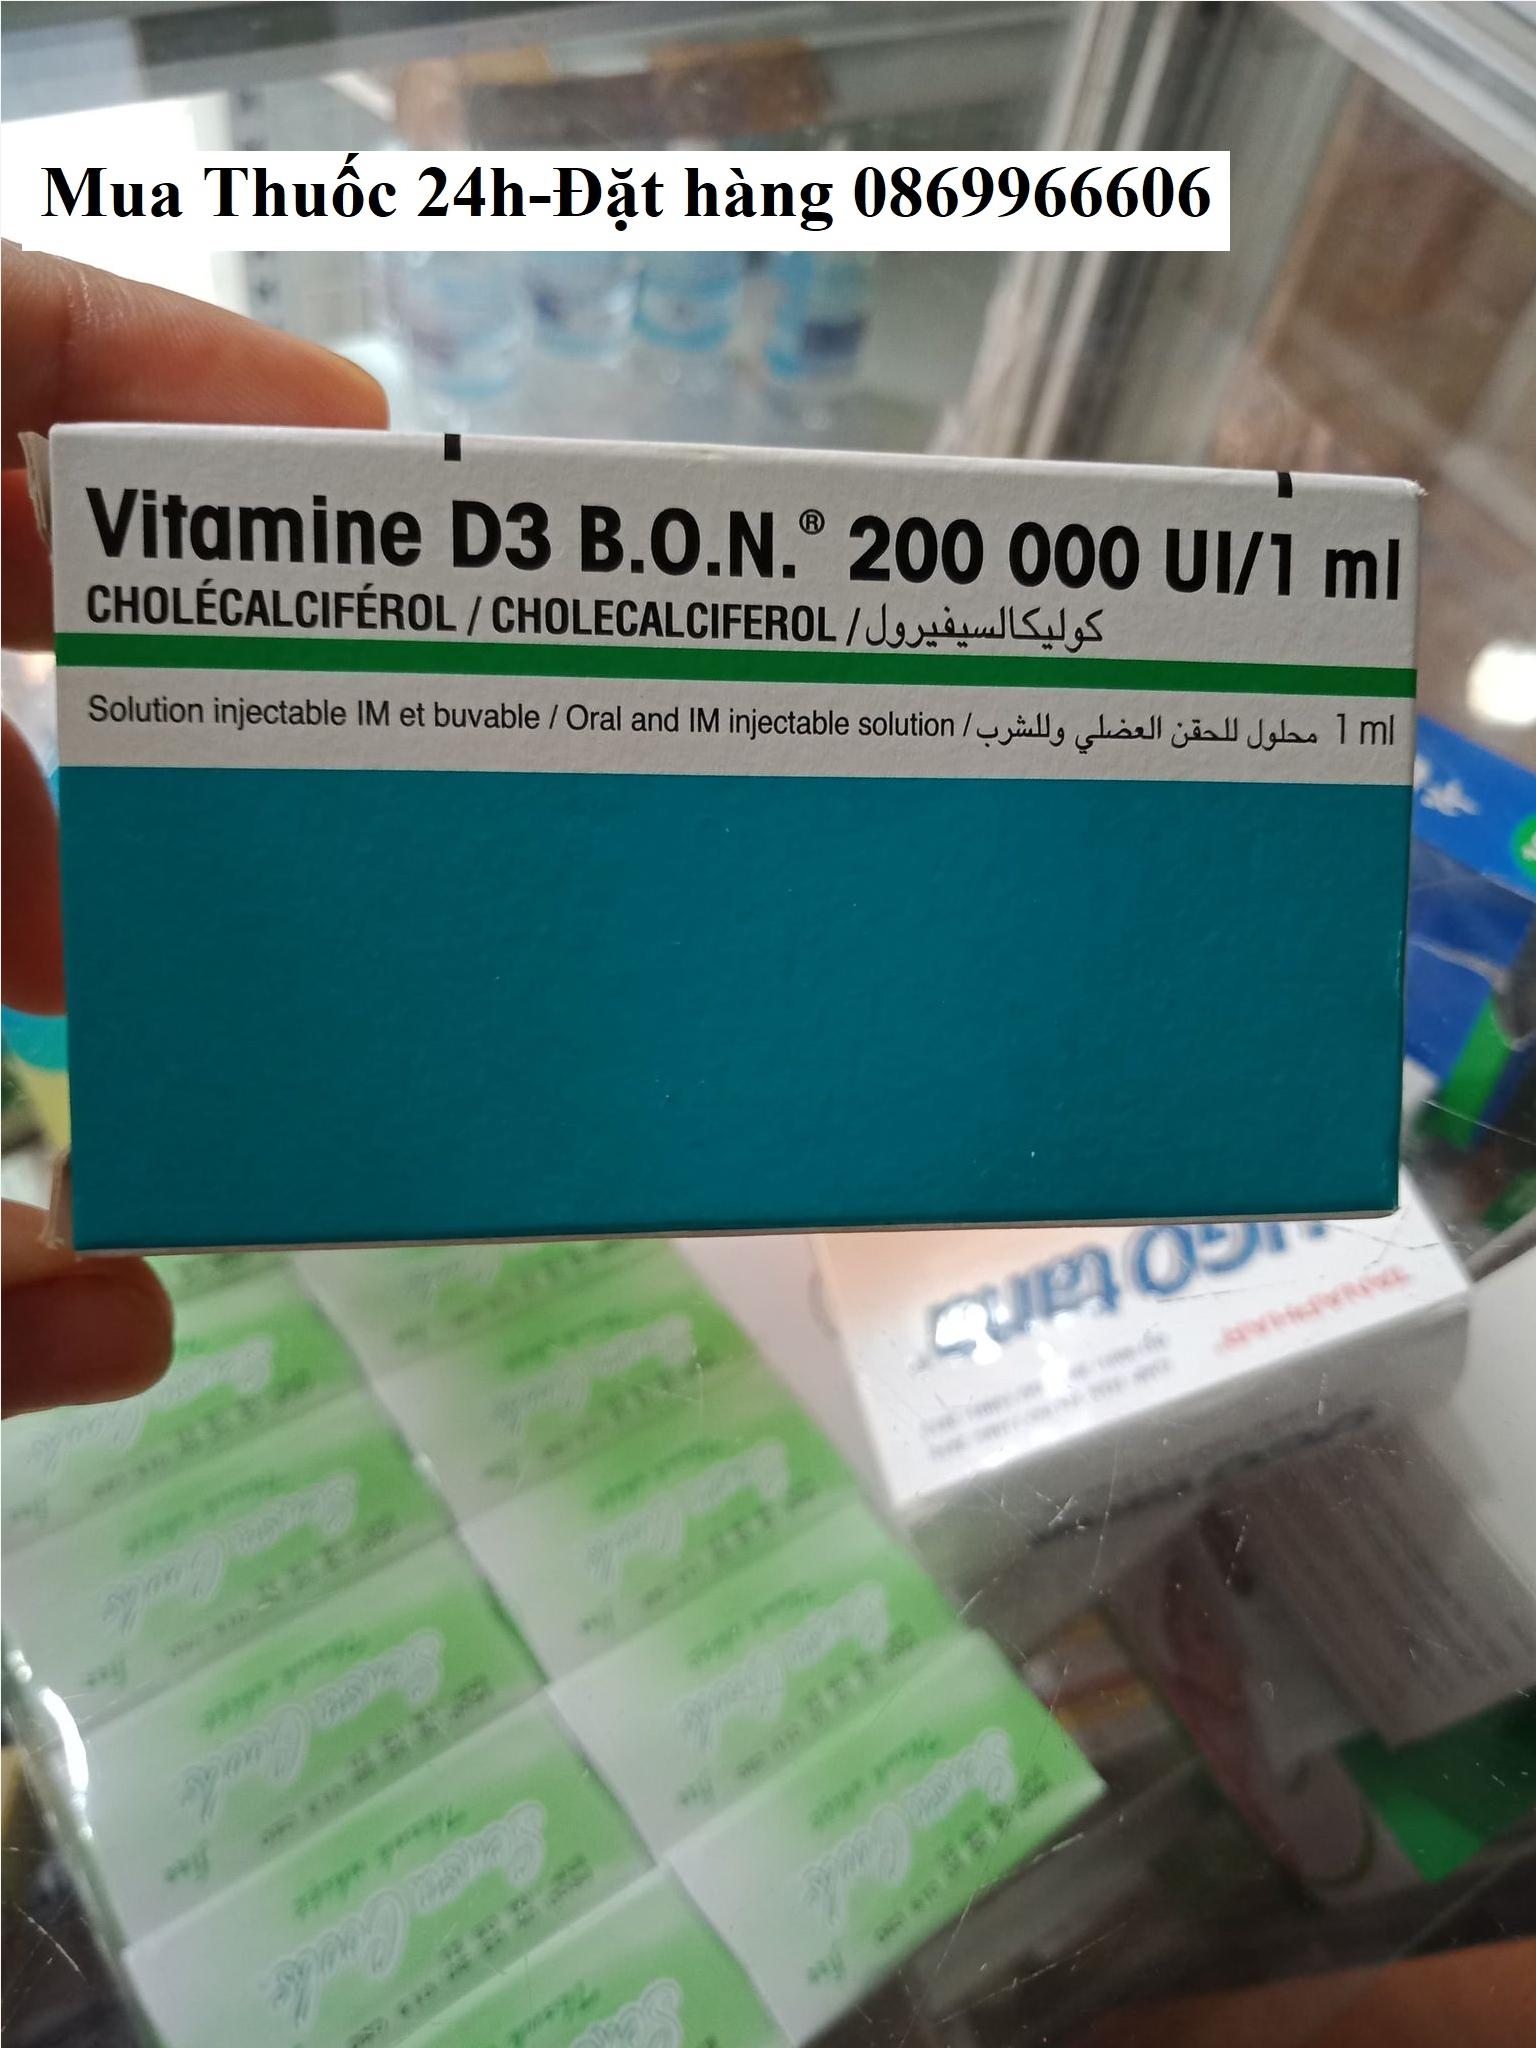 Vitamin D3 B.O.N giá bao nhiêu mua ở đâu?